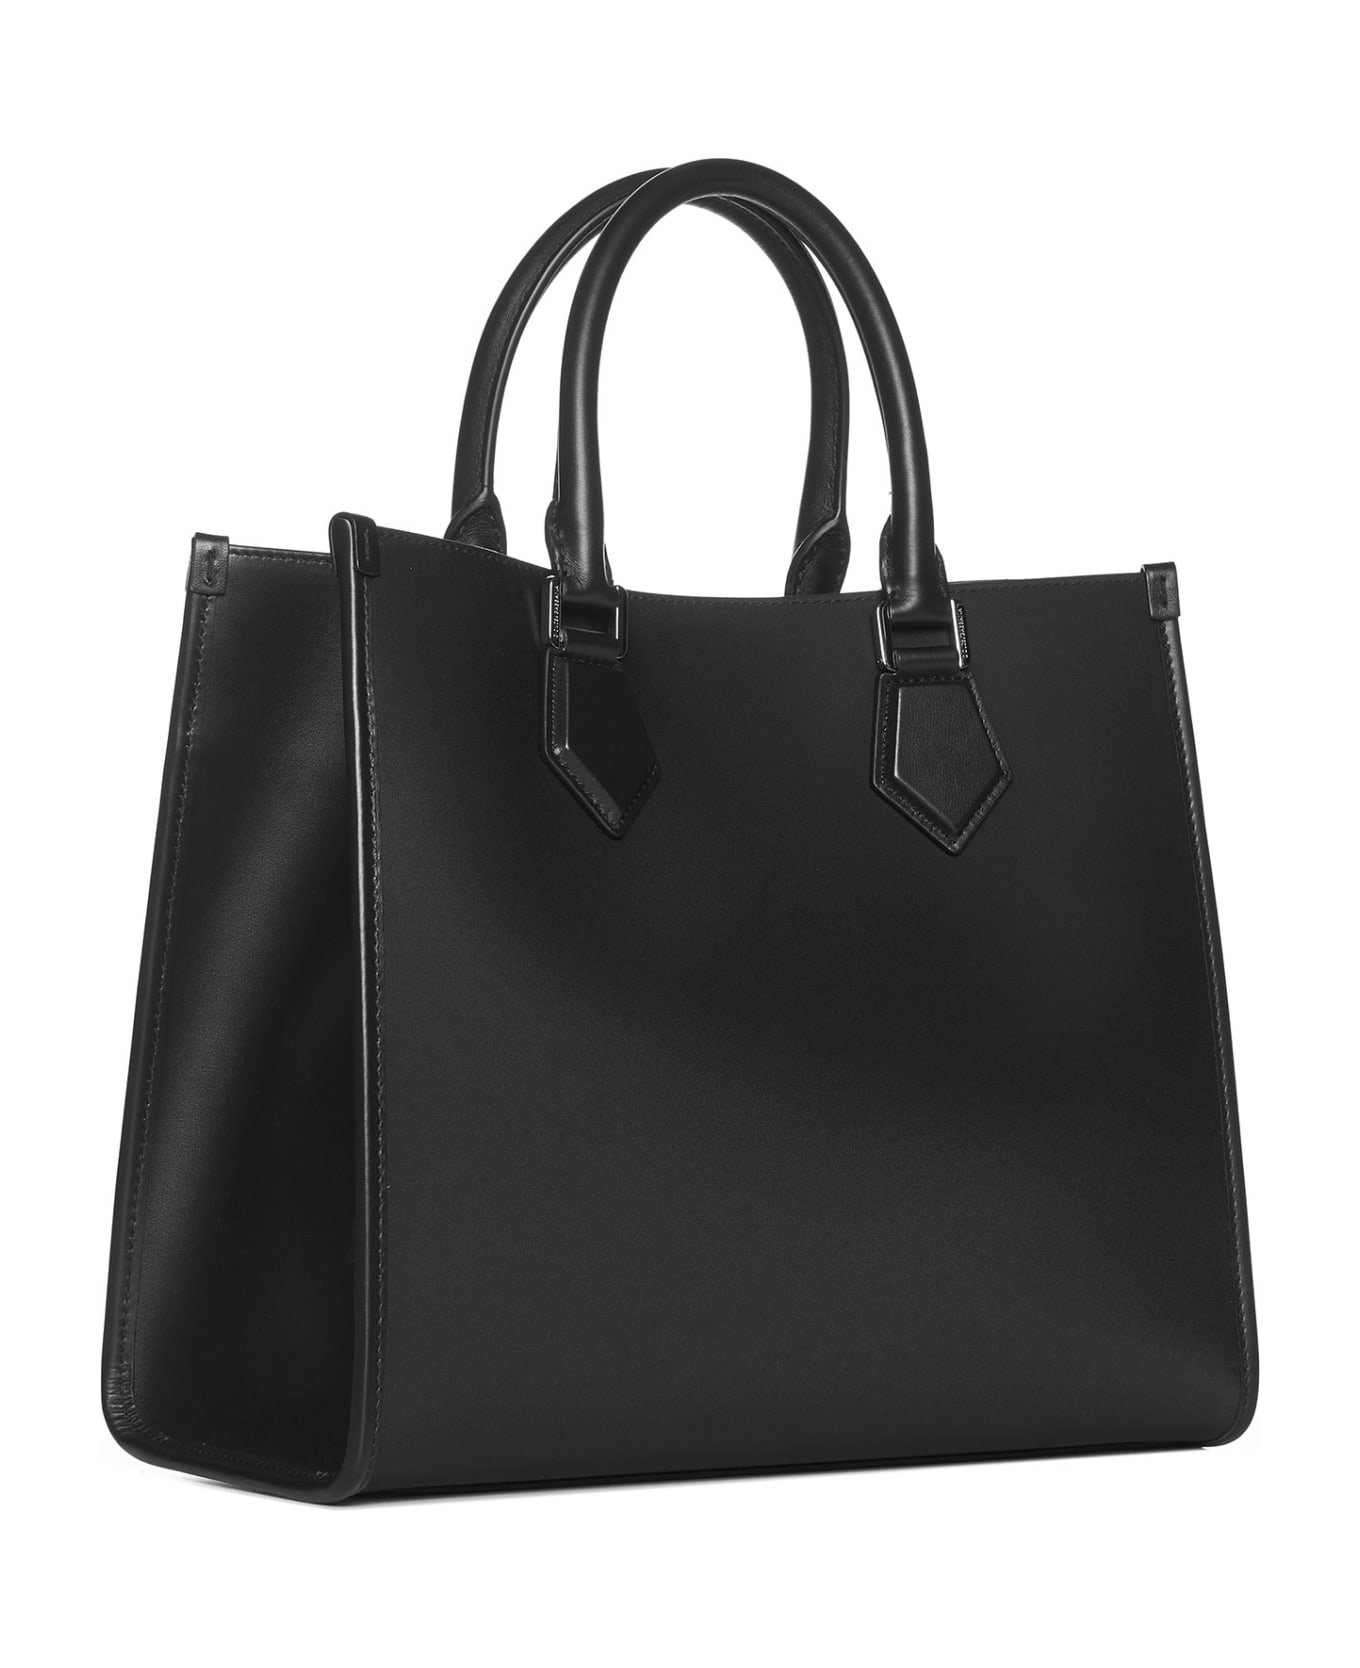 Dolce & Gabbana Logo Shopping Bag - Nero/nero トートバッグ